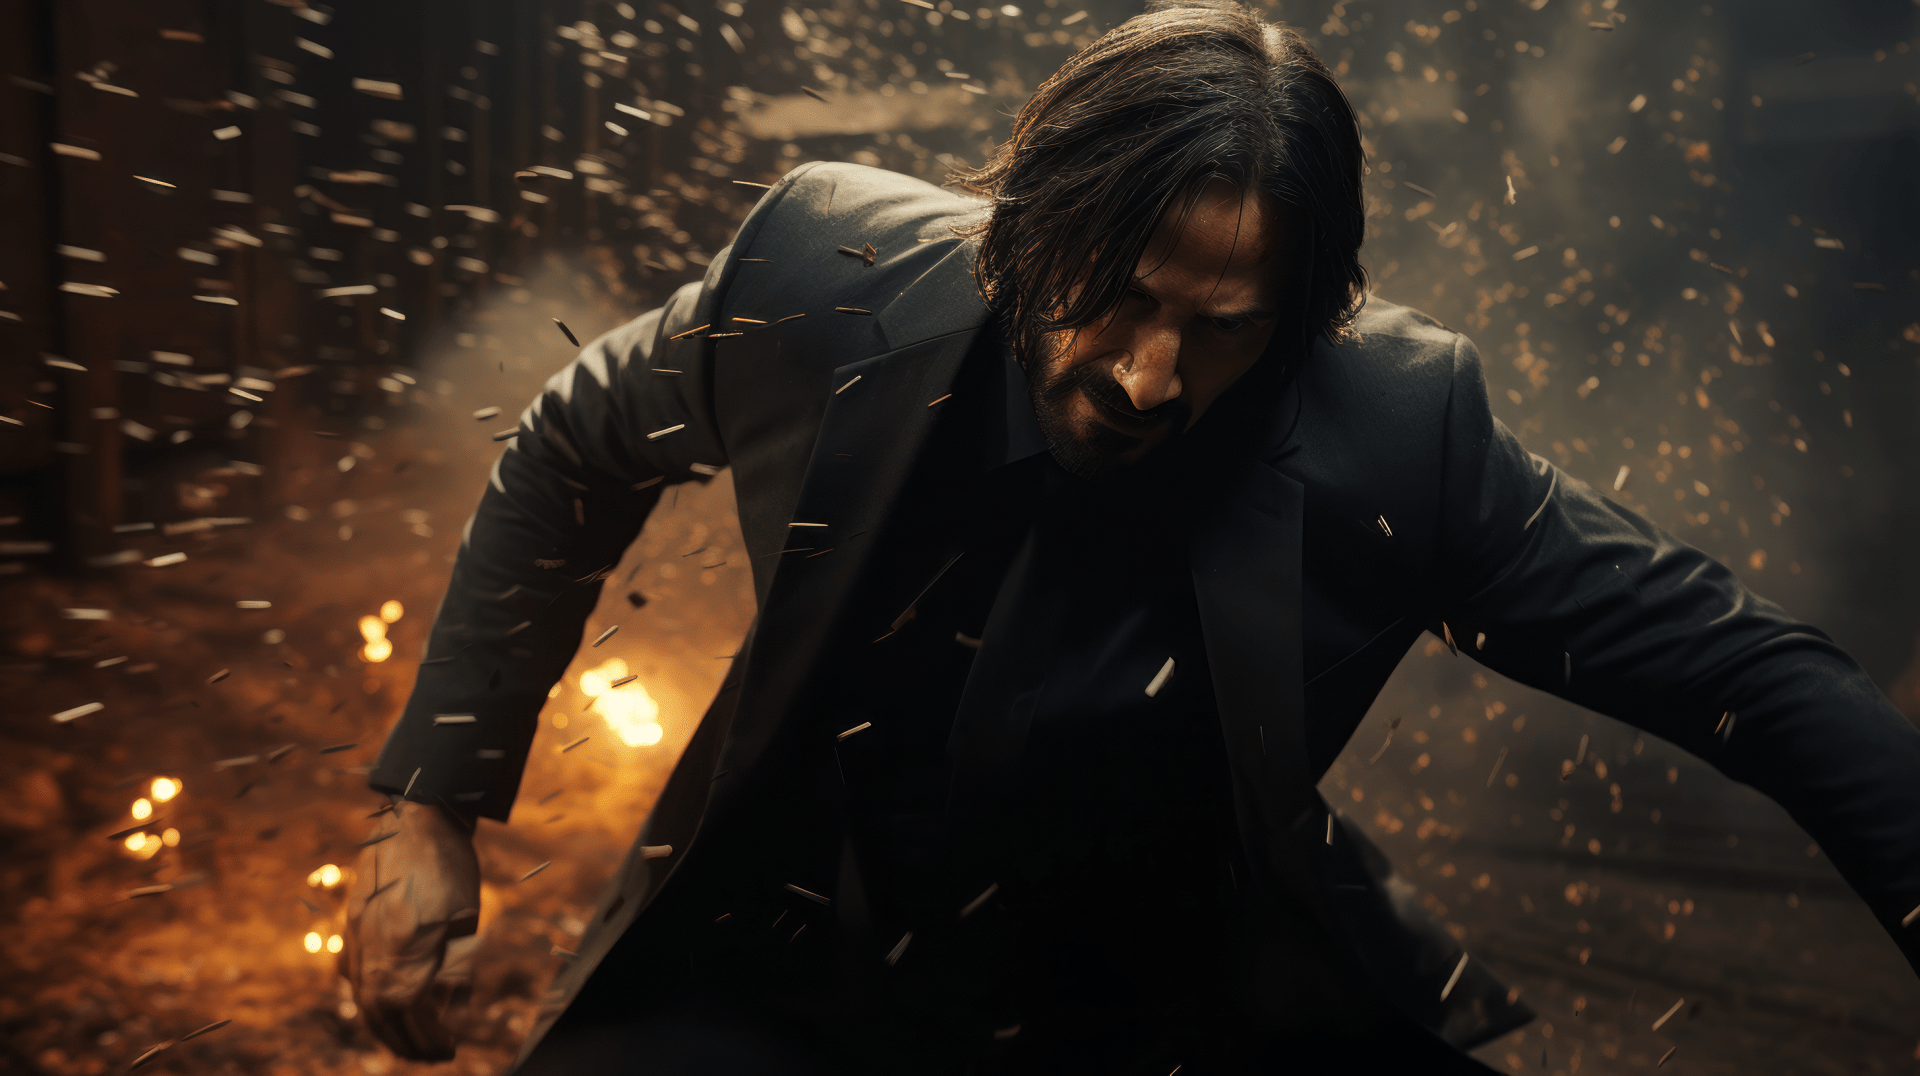 John Wick, played by Keanu Reeves, walks through a rain of bullets and debris. - John Wick